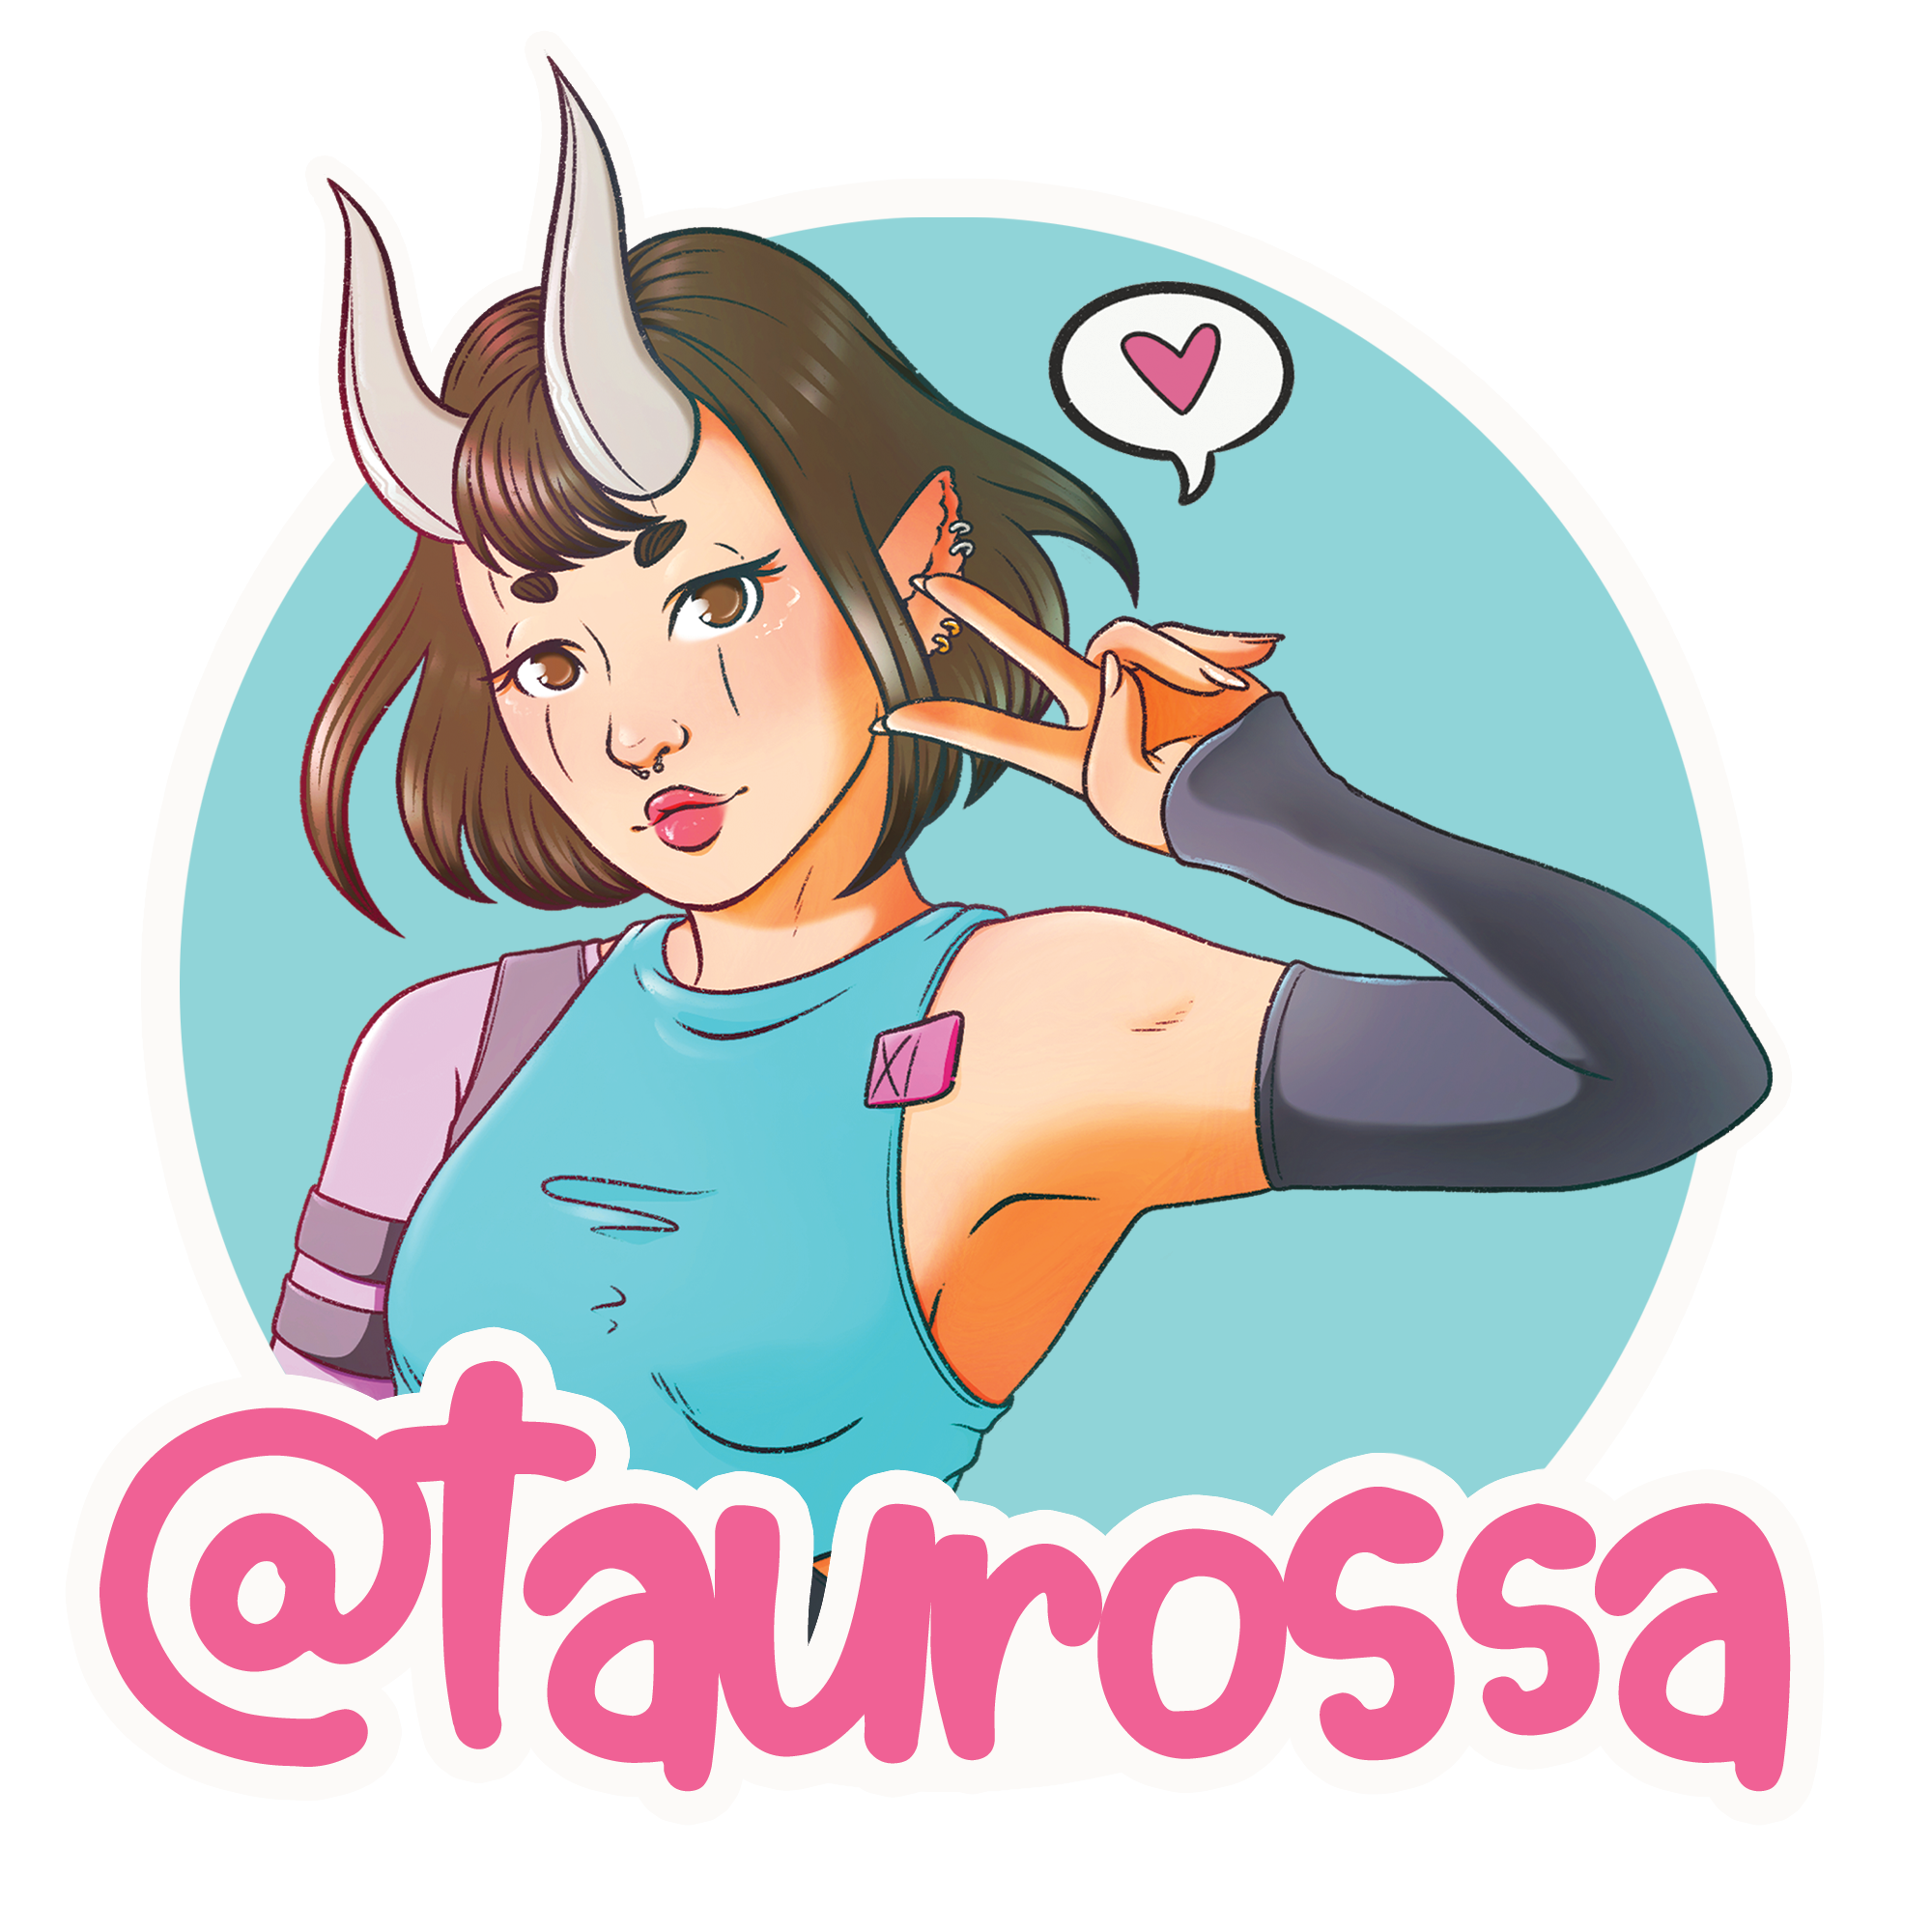 Taurossa Logo